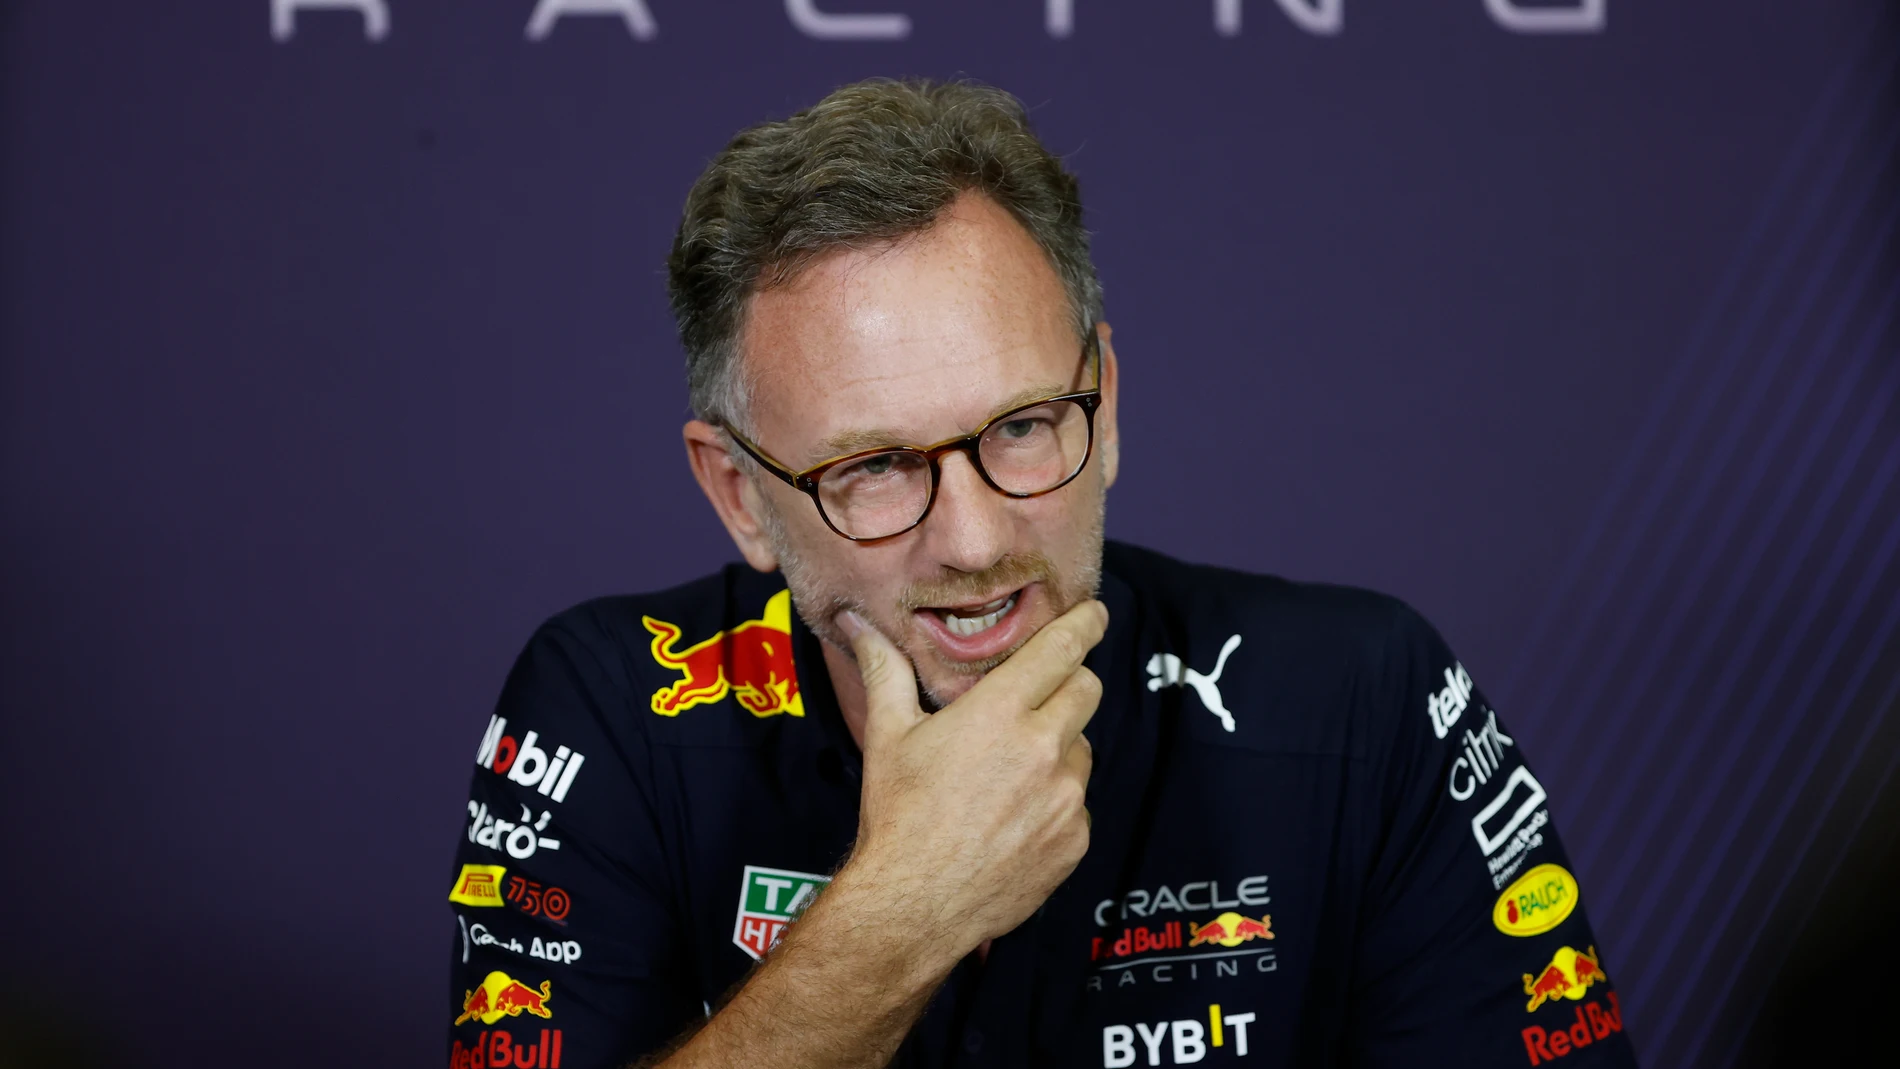 El director de Red Bull Racing team, Christian Horner